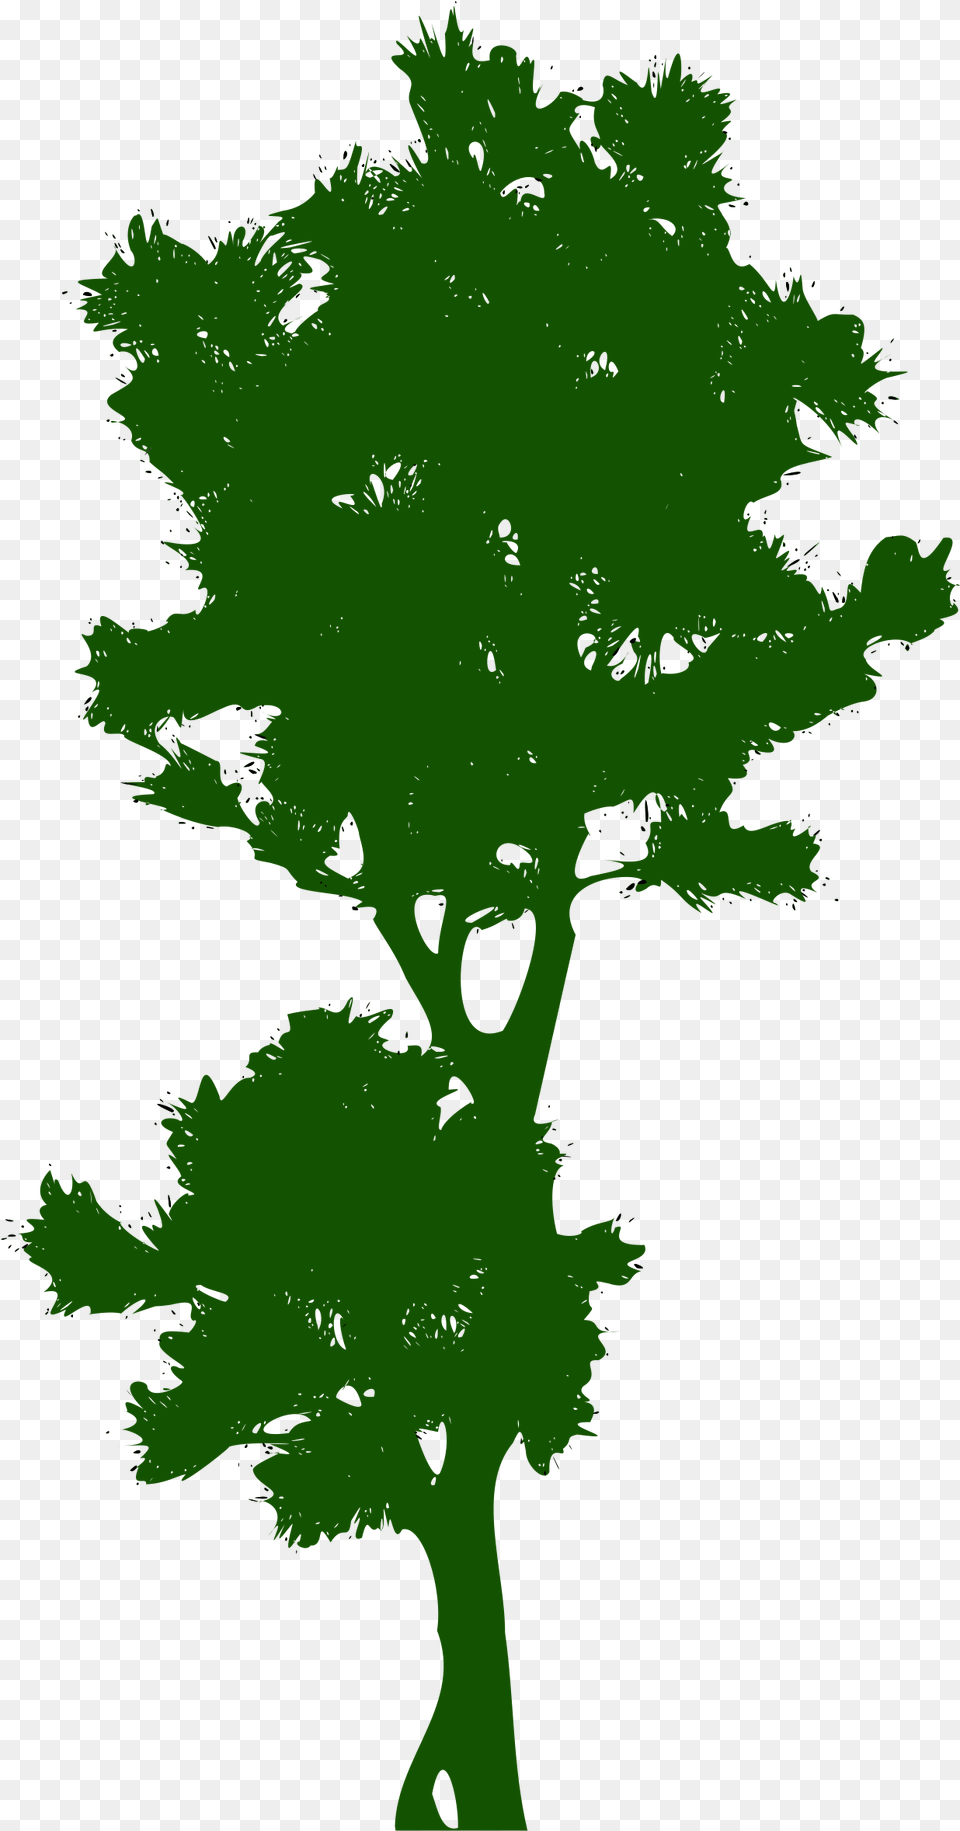 Tree Public Domain Clip Art Pohon Tinggi Vektor, Herbs, Leaf, Plant, Parsley Free Transparent Png